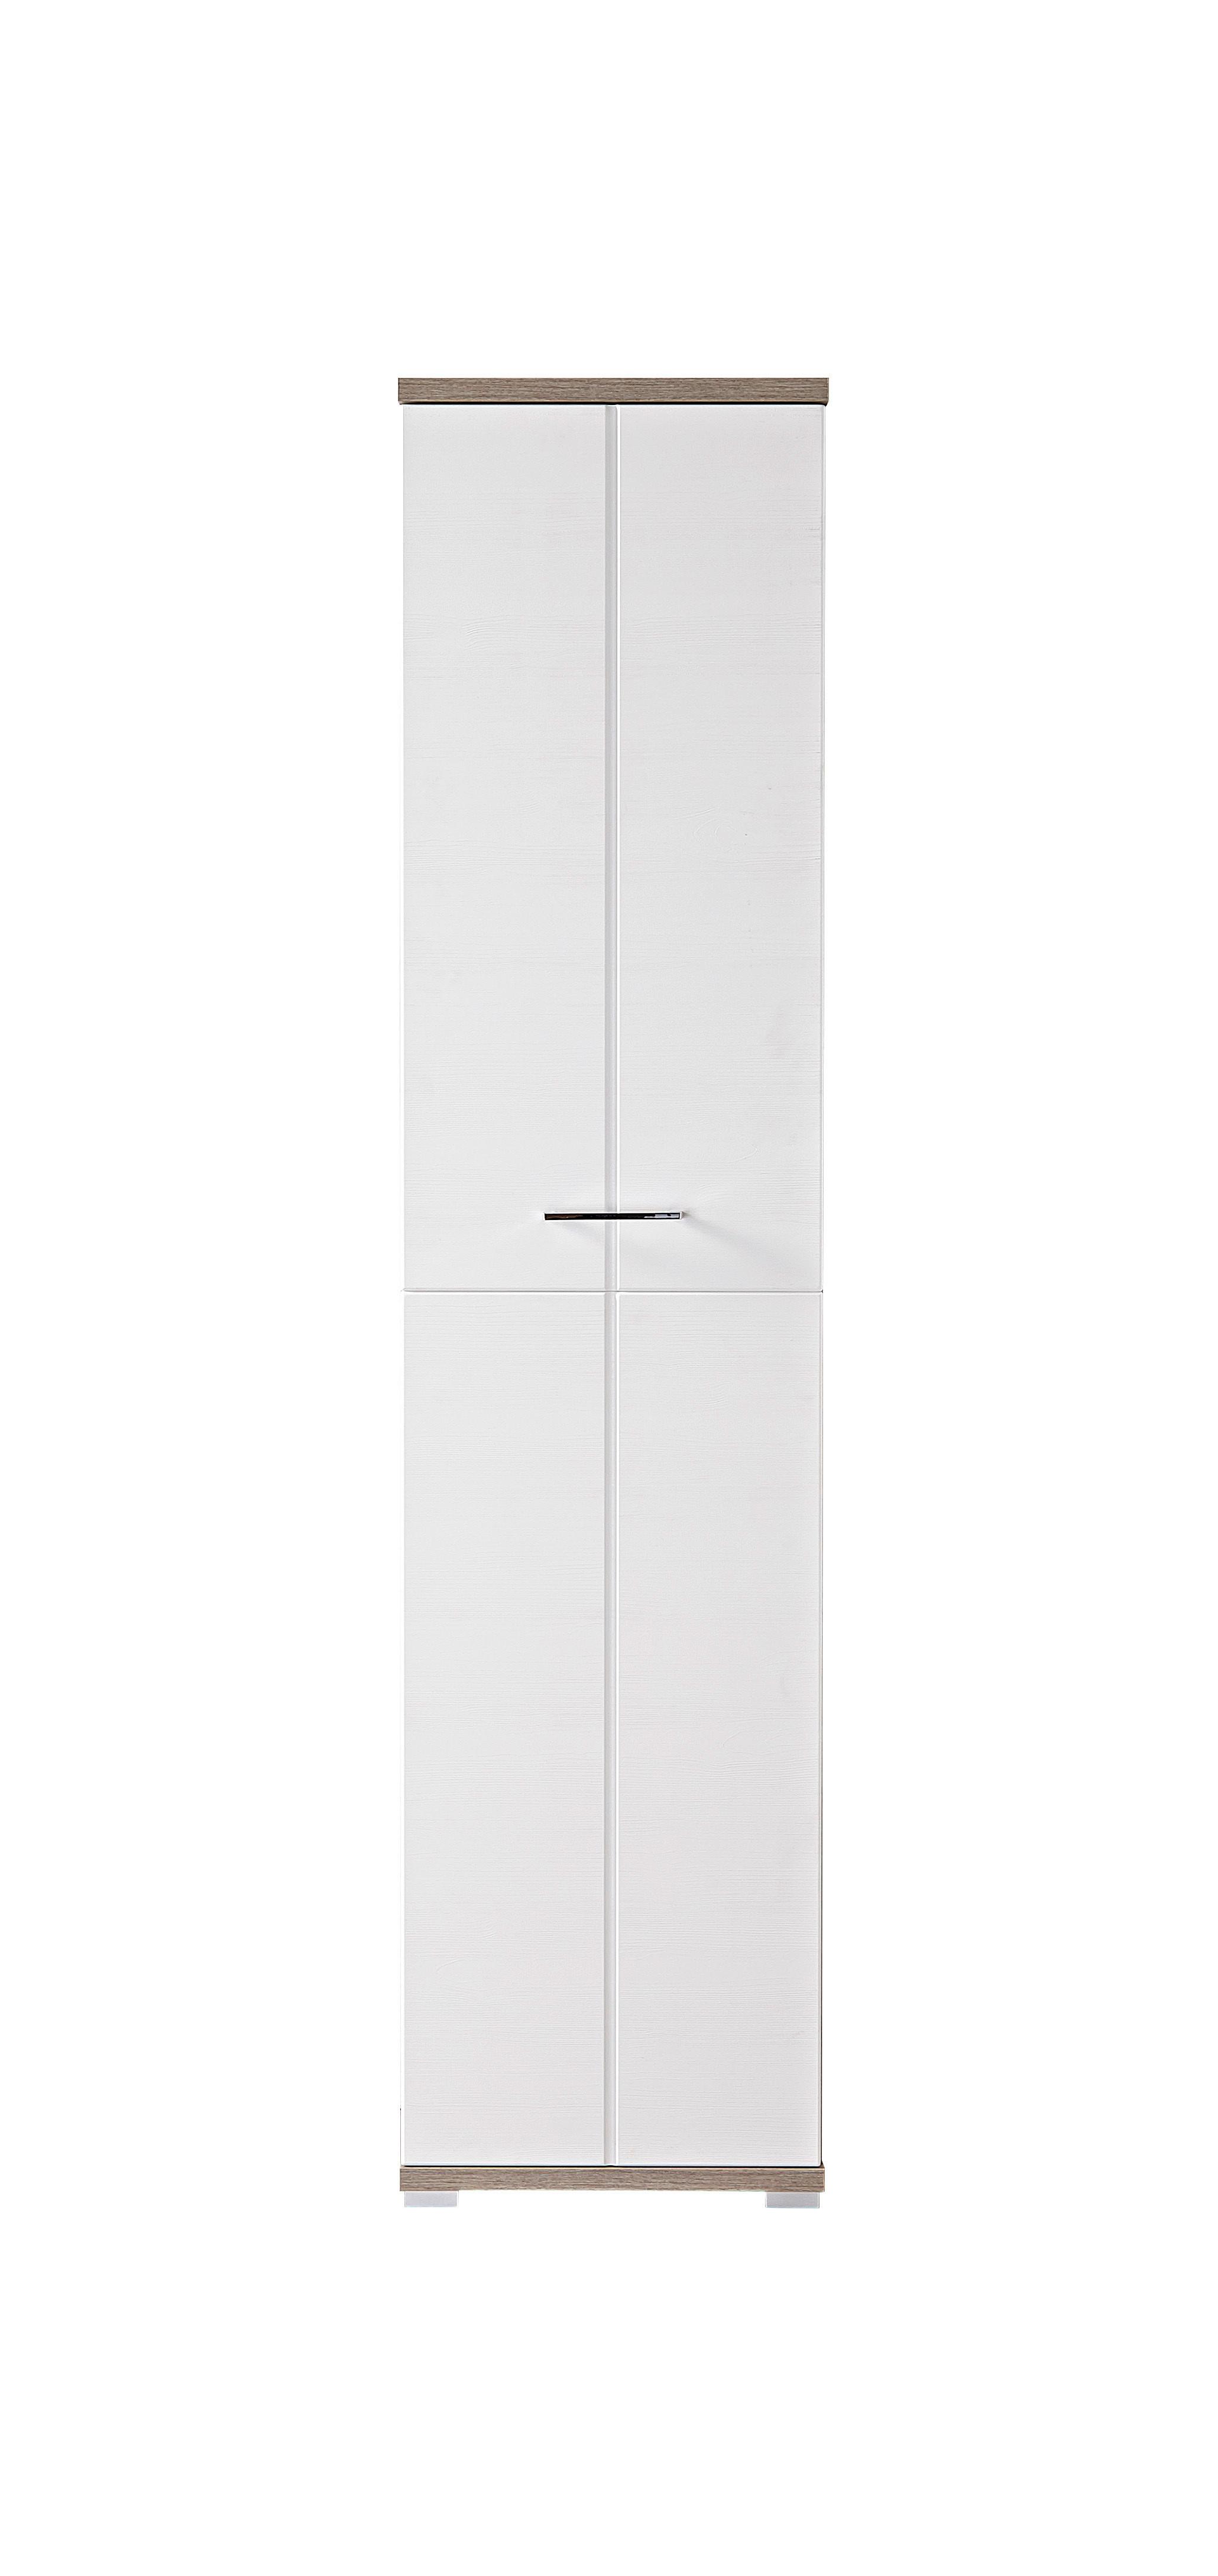 Šatní Skříň Plus - bílá/barvy chromu, Moderní, kov/dřevo (47/199/39cm) - Premium Living